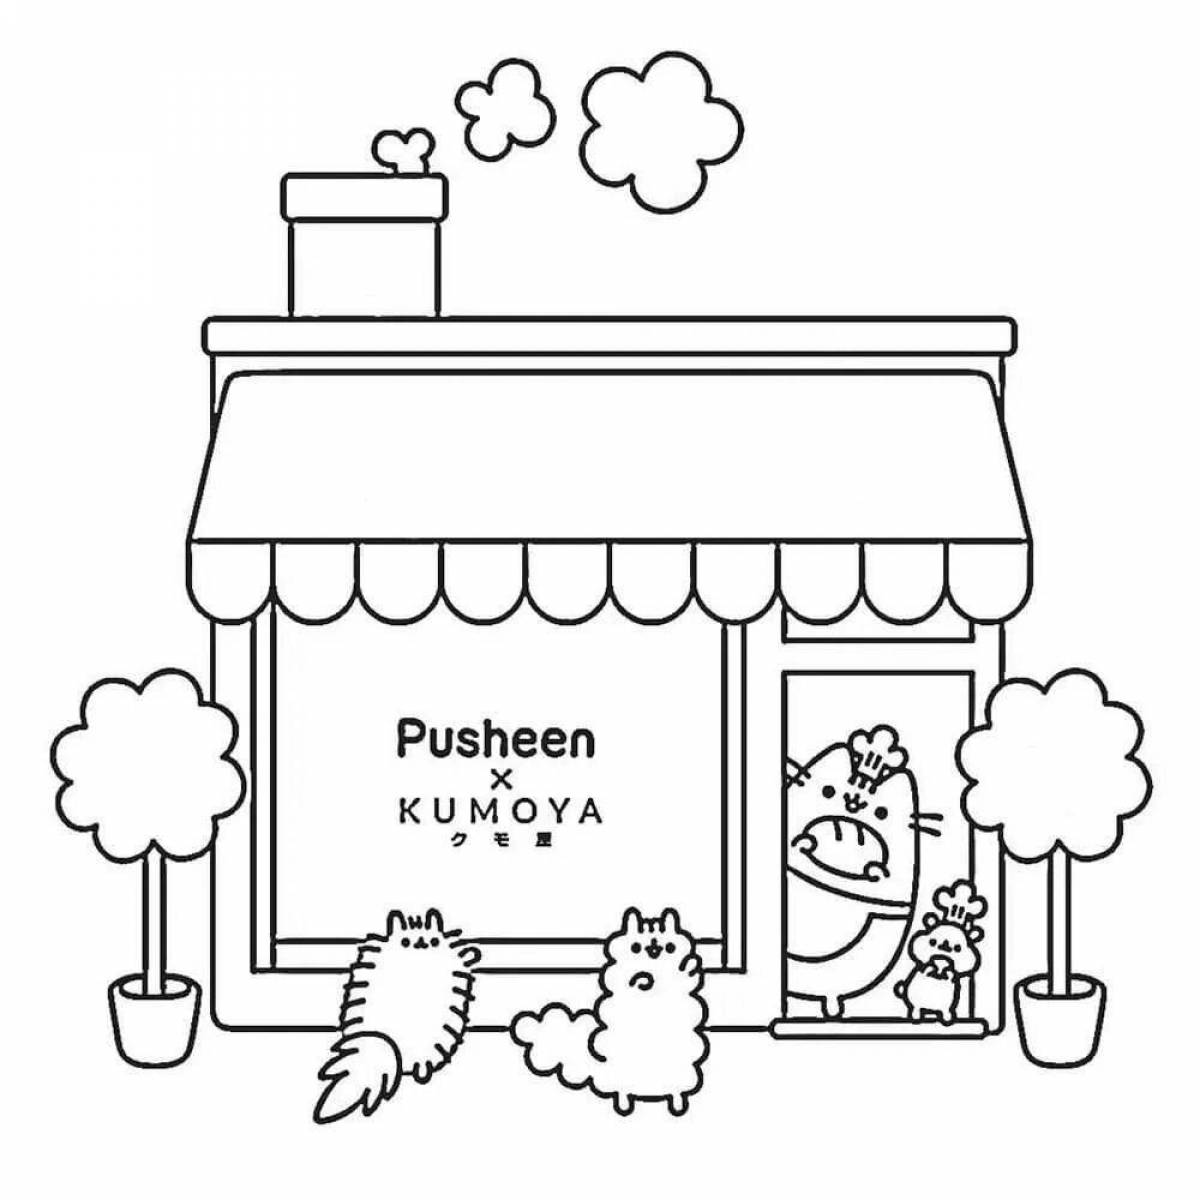 Pusheen's fun Christmas coloring book